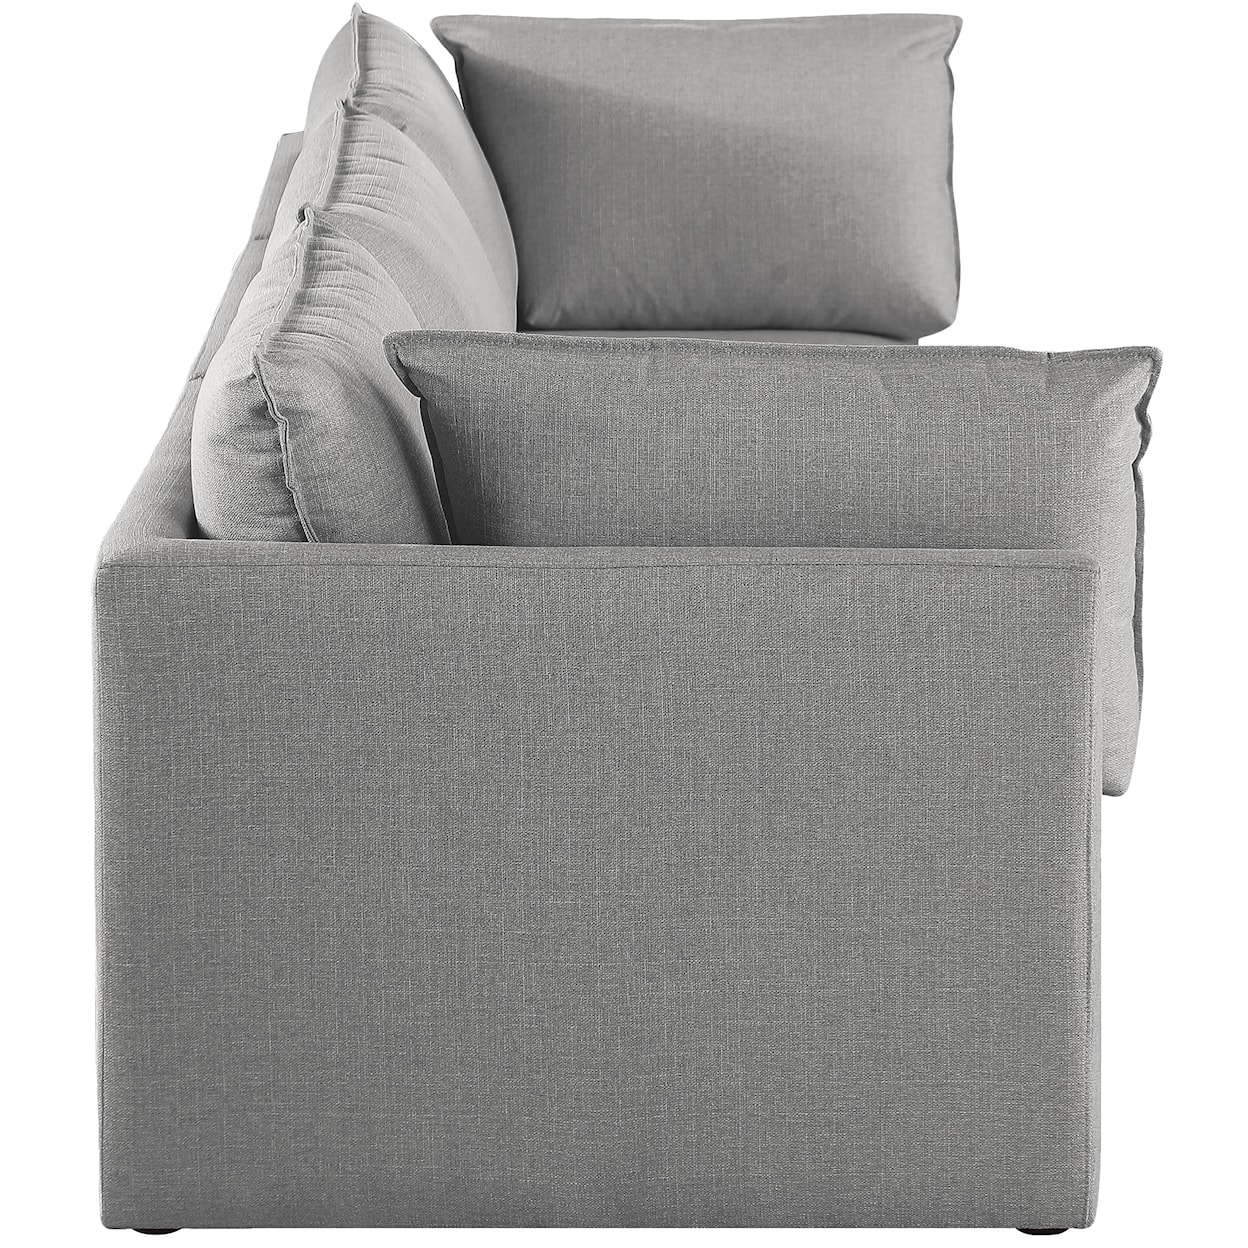 Meridian Furniture Mackenzie Modular Sofa